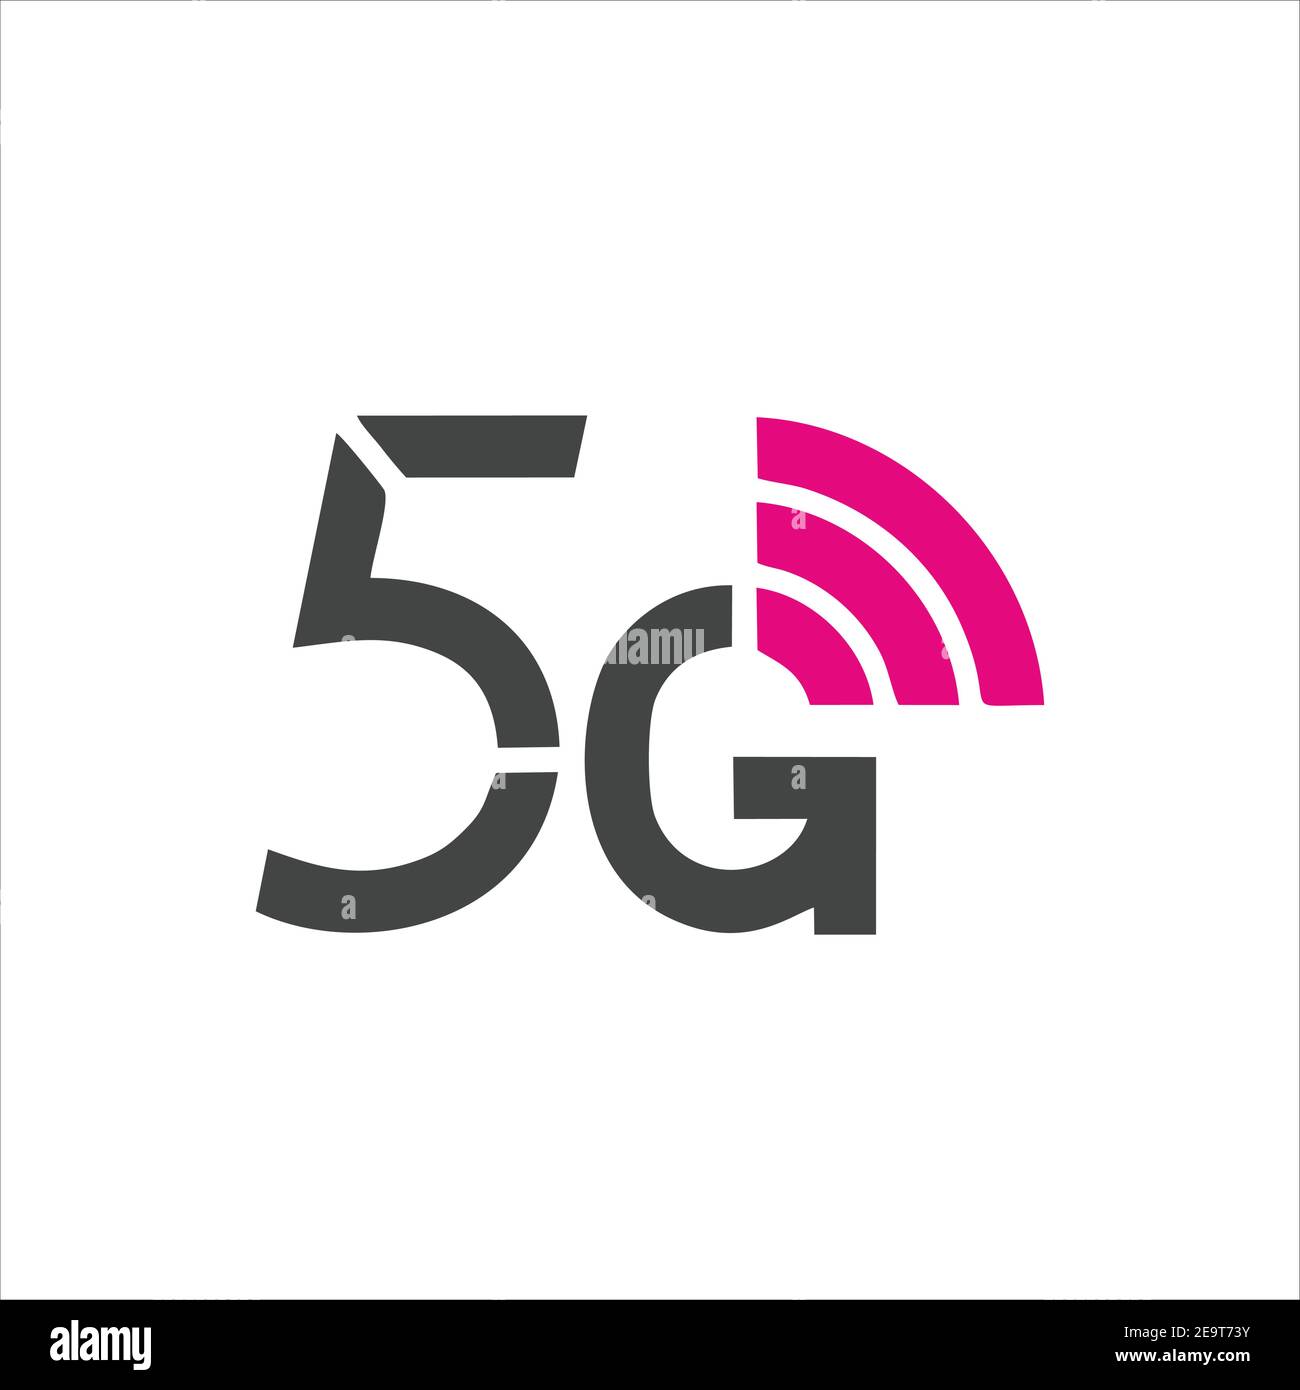 5G, 5G Symbol, 5G Vektor, 5G Symbol Vektor, 5G Logo, 5G Symbol, 5G Zeichen, 5G Symbol Design. 5G Symbolvektordarstellung. 5G Design der Verbindungsvektorvorlage Stock Vektor